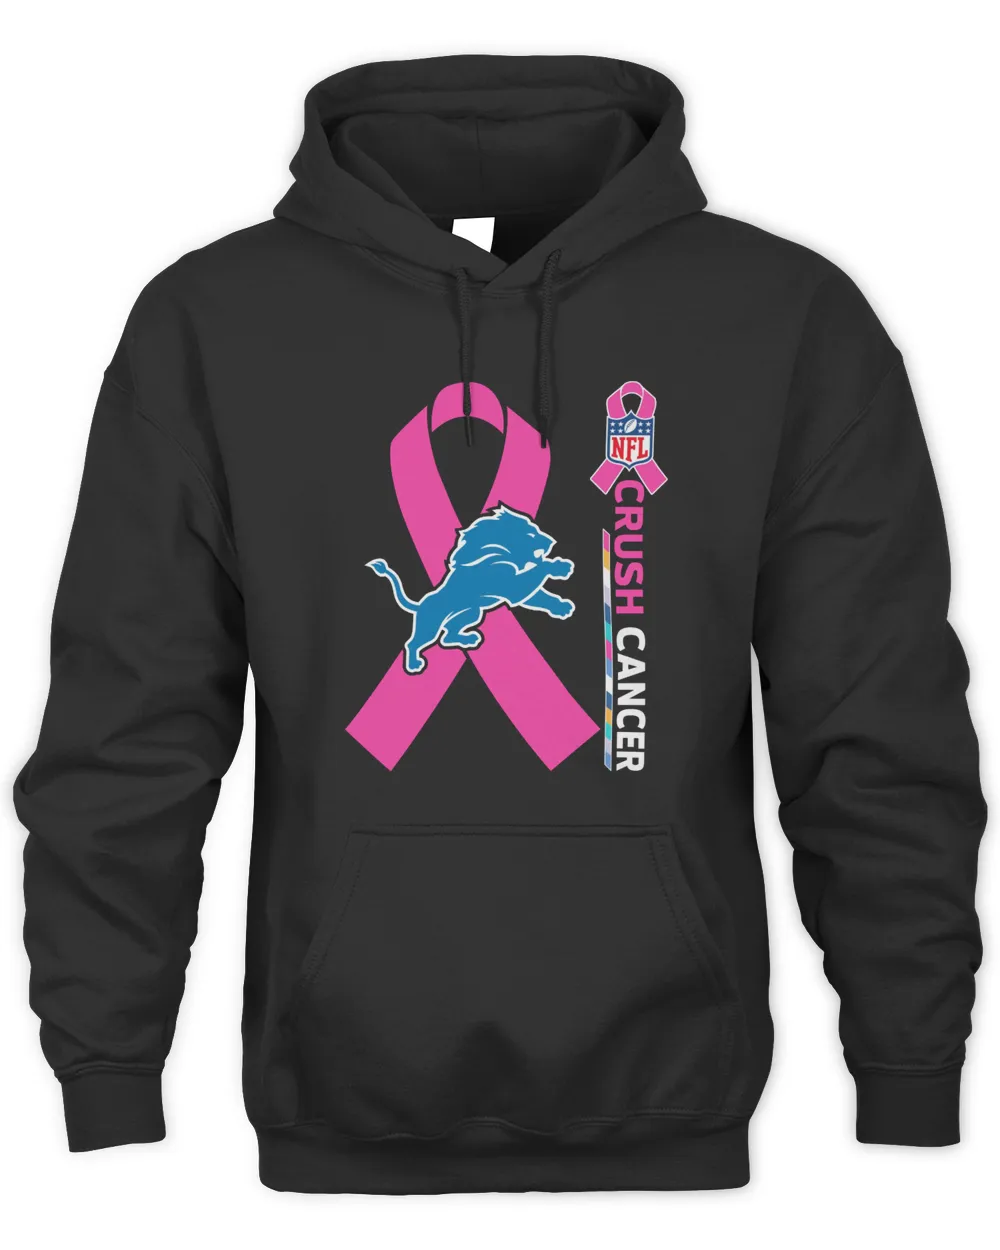 nfl cancer sweatshirt